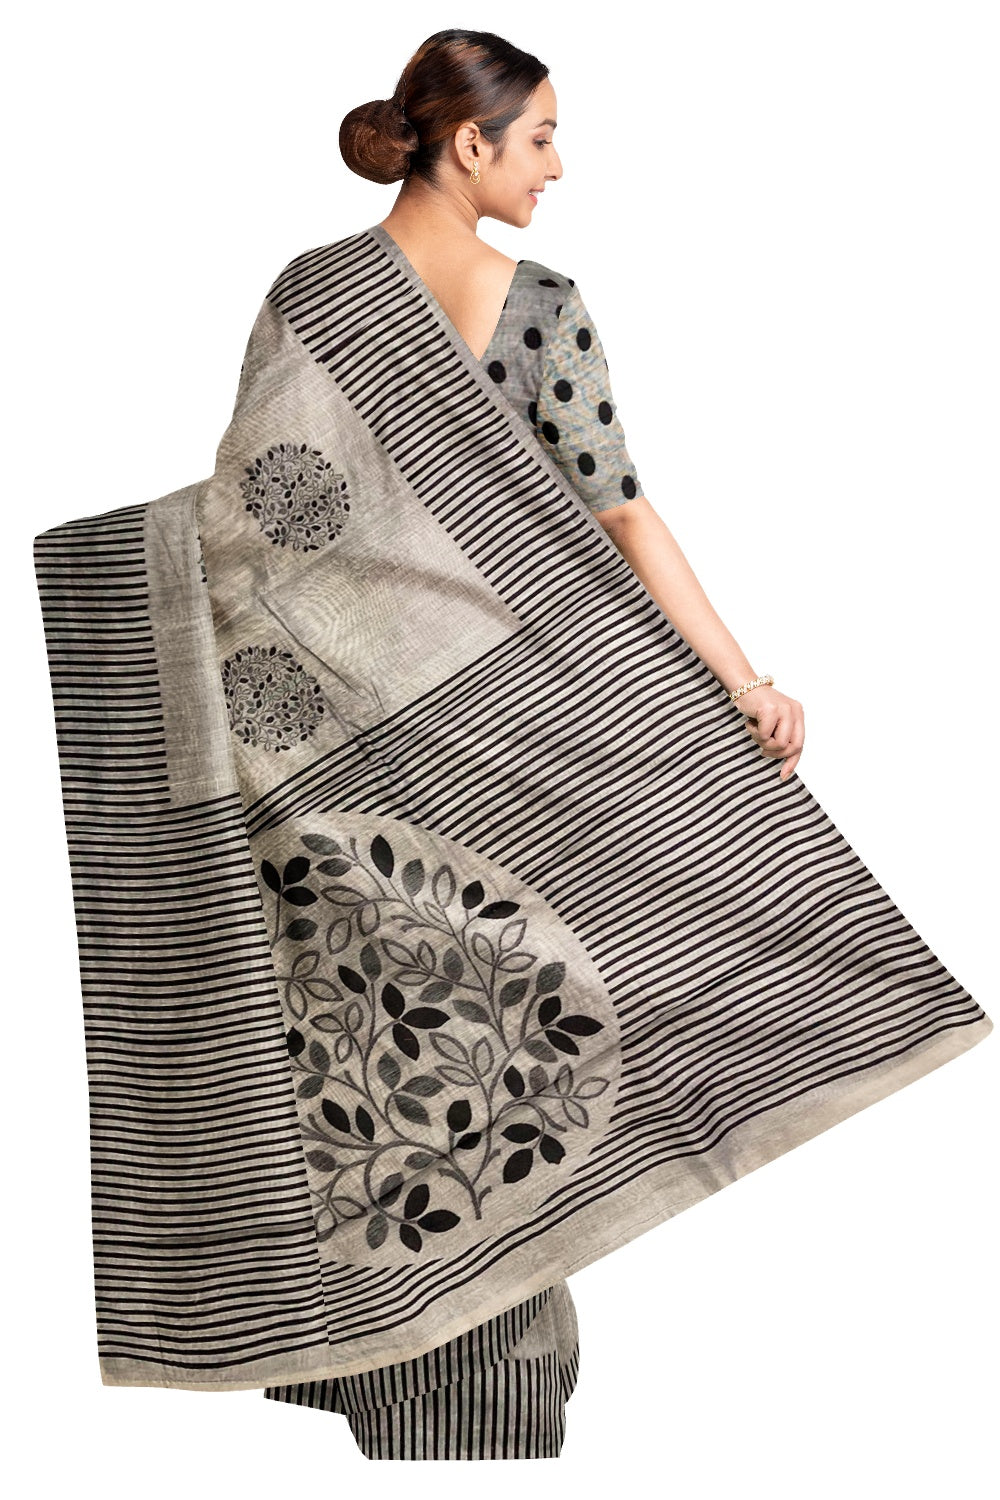 Southloom Grey Cotton Designer Saree with Stripes Border